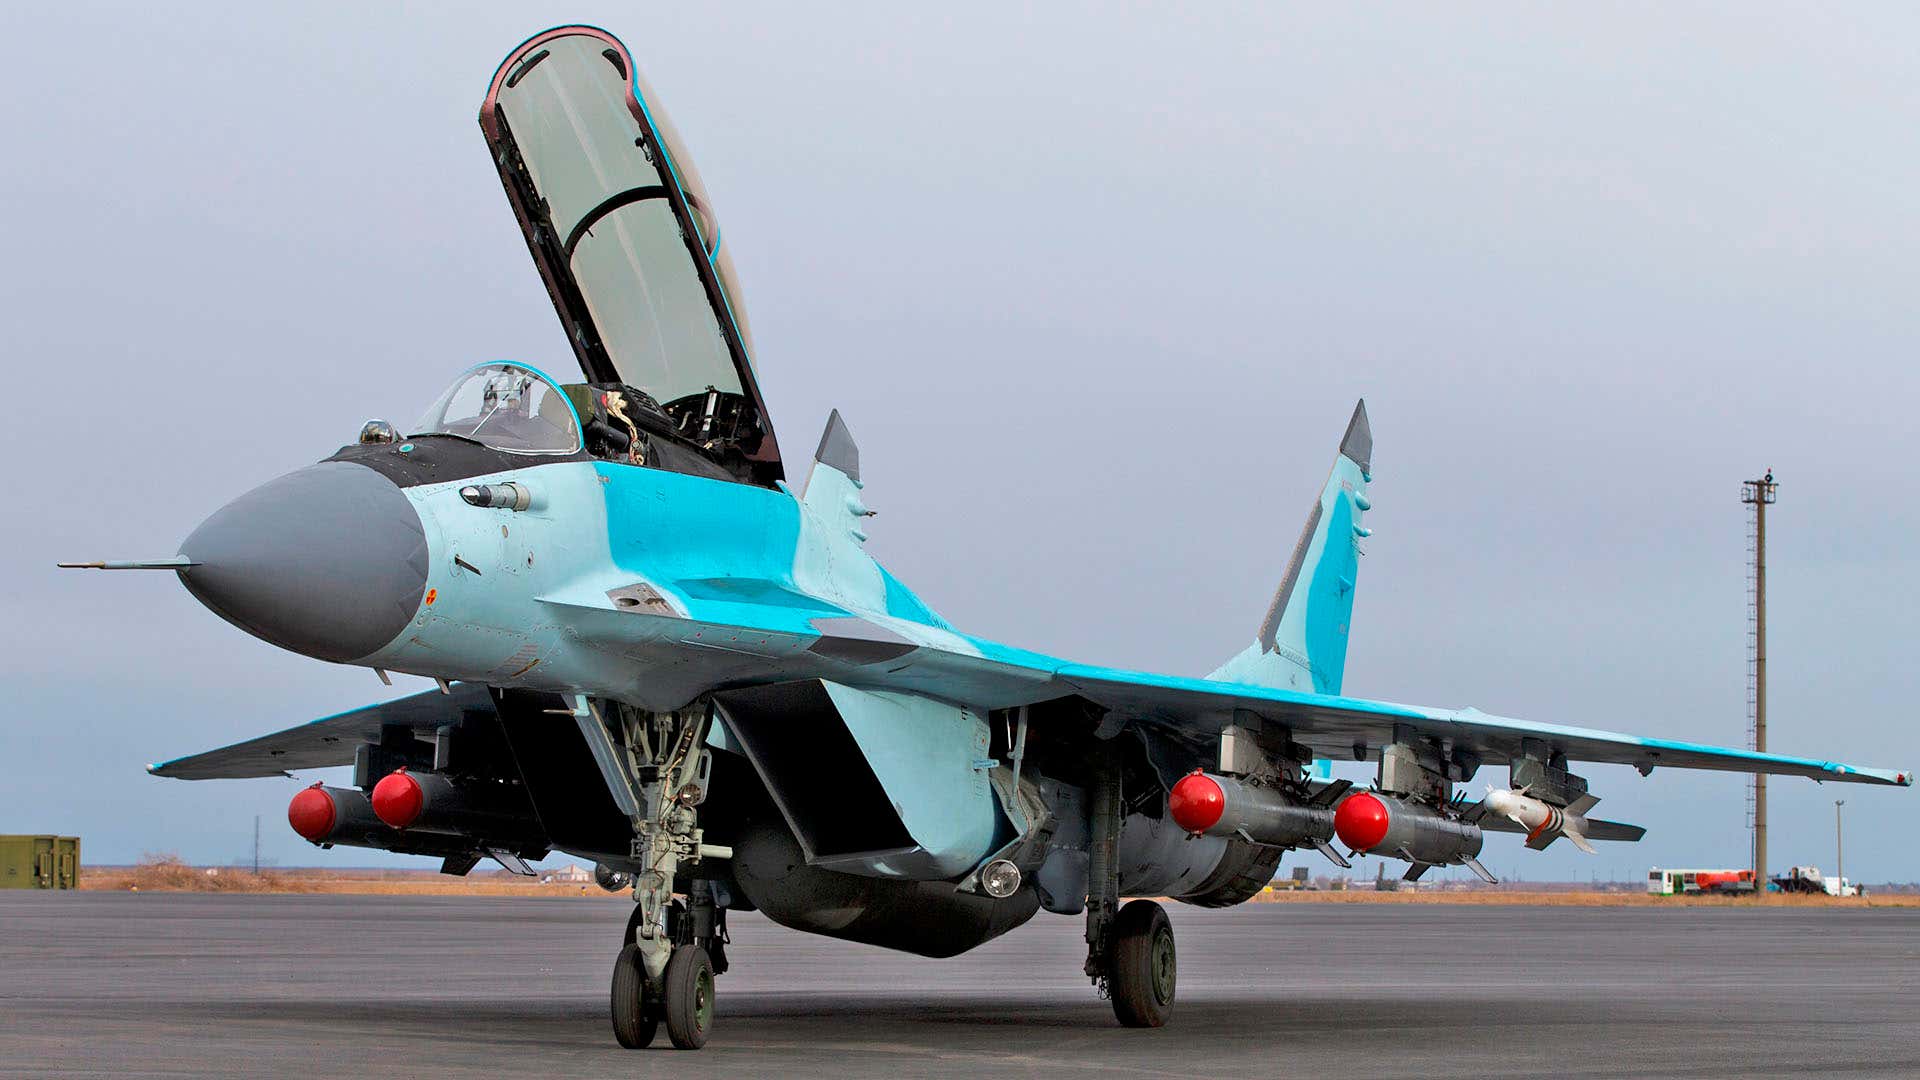 MiG-35: Το υπερσύγχρονο ρωσικό μαχητικό 4ης γενιάς – Η «απειλή» του Su-57 (βίντεο)